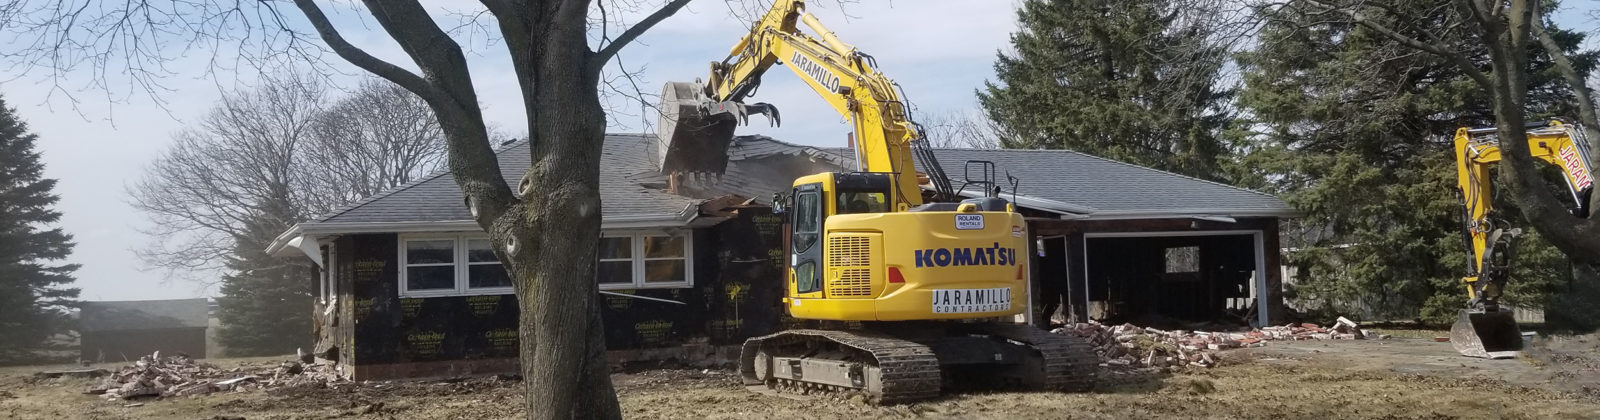 An excavator razing a house